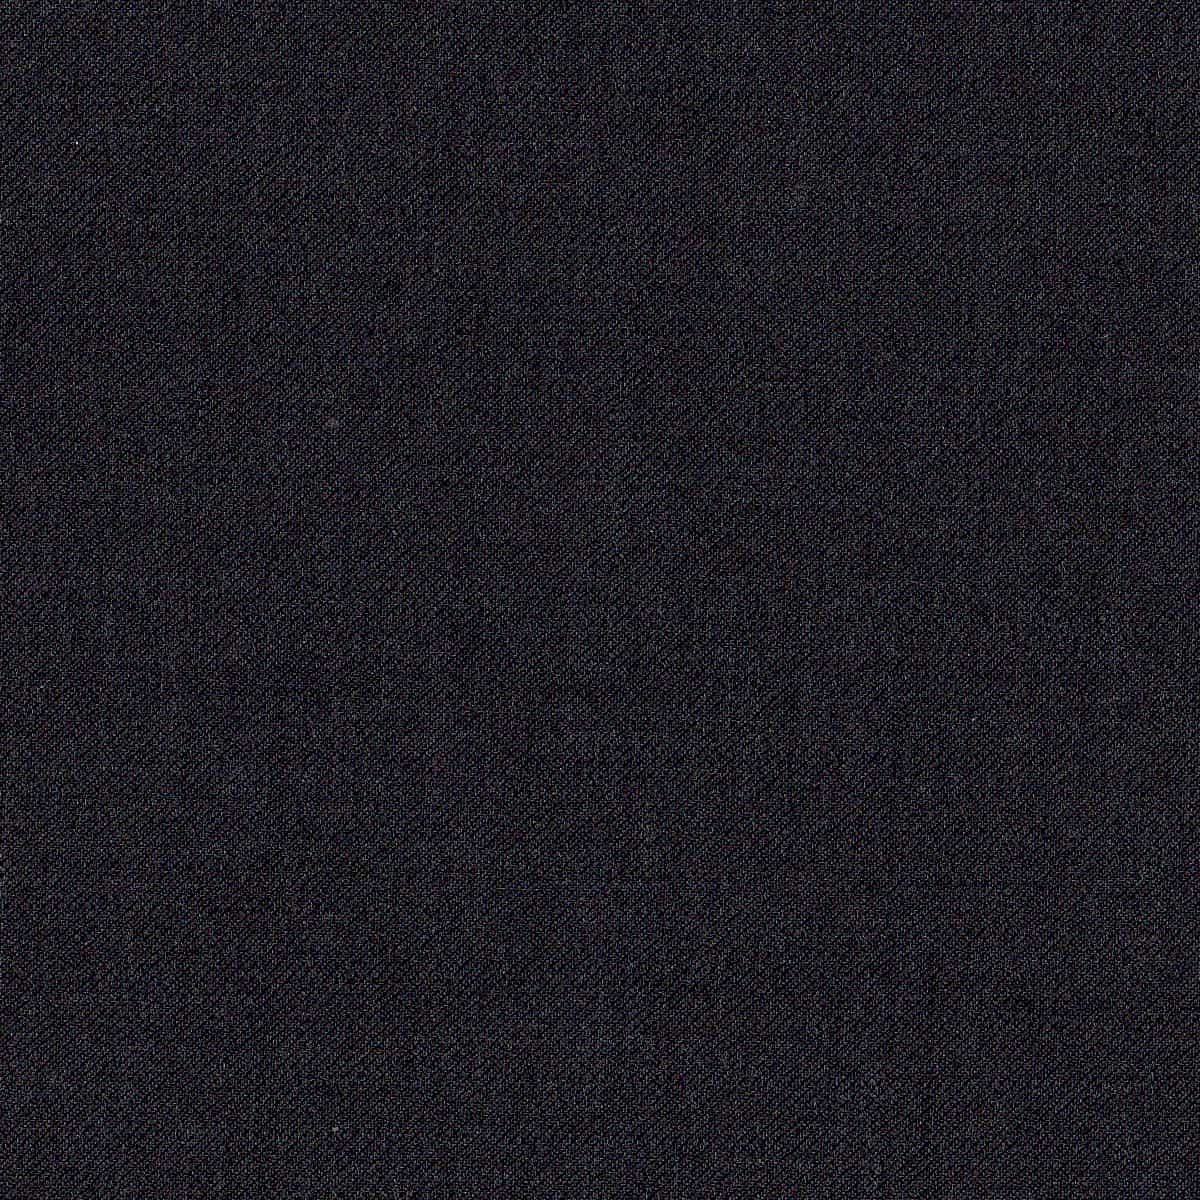 dark color men's classic wool fabric